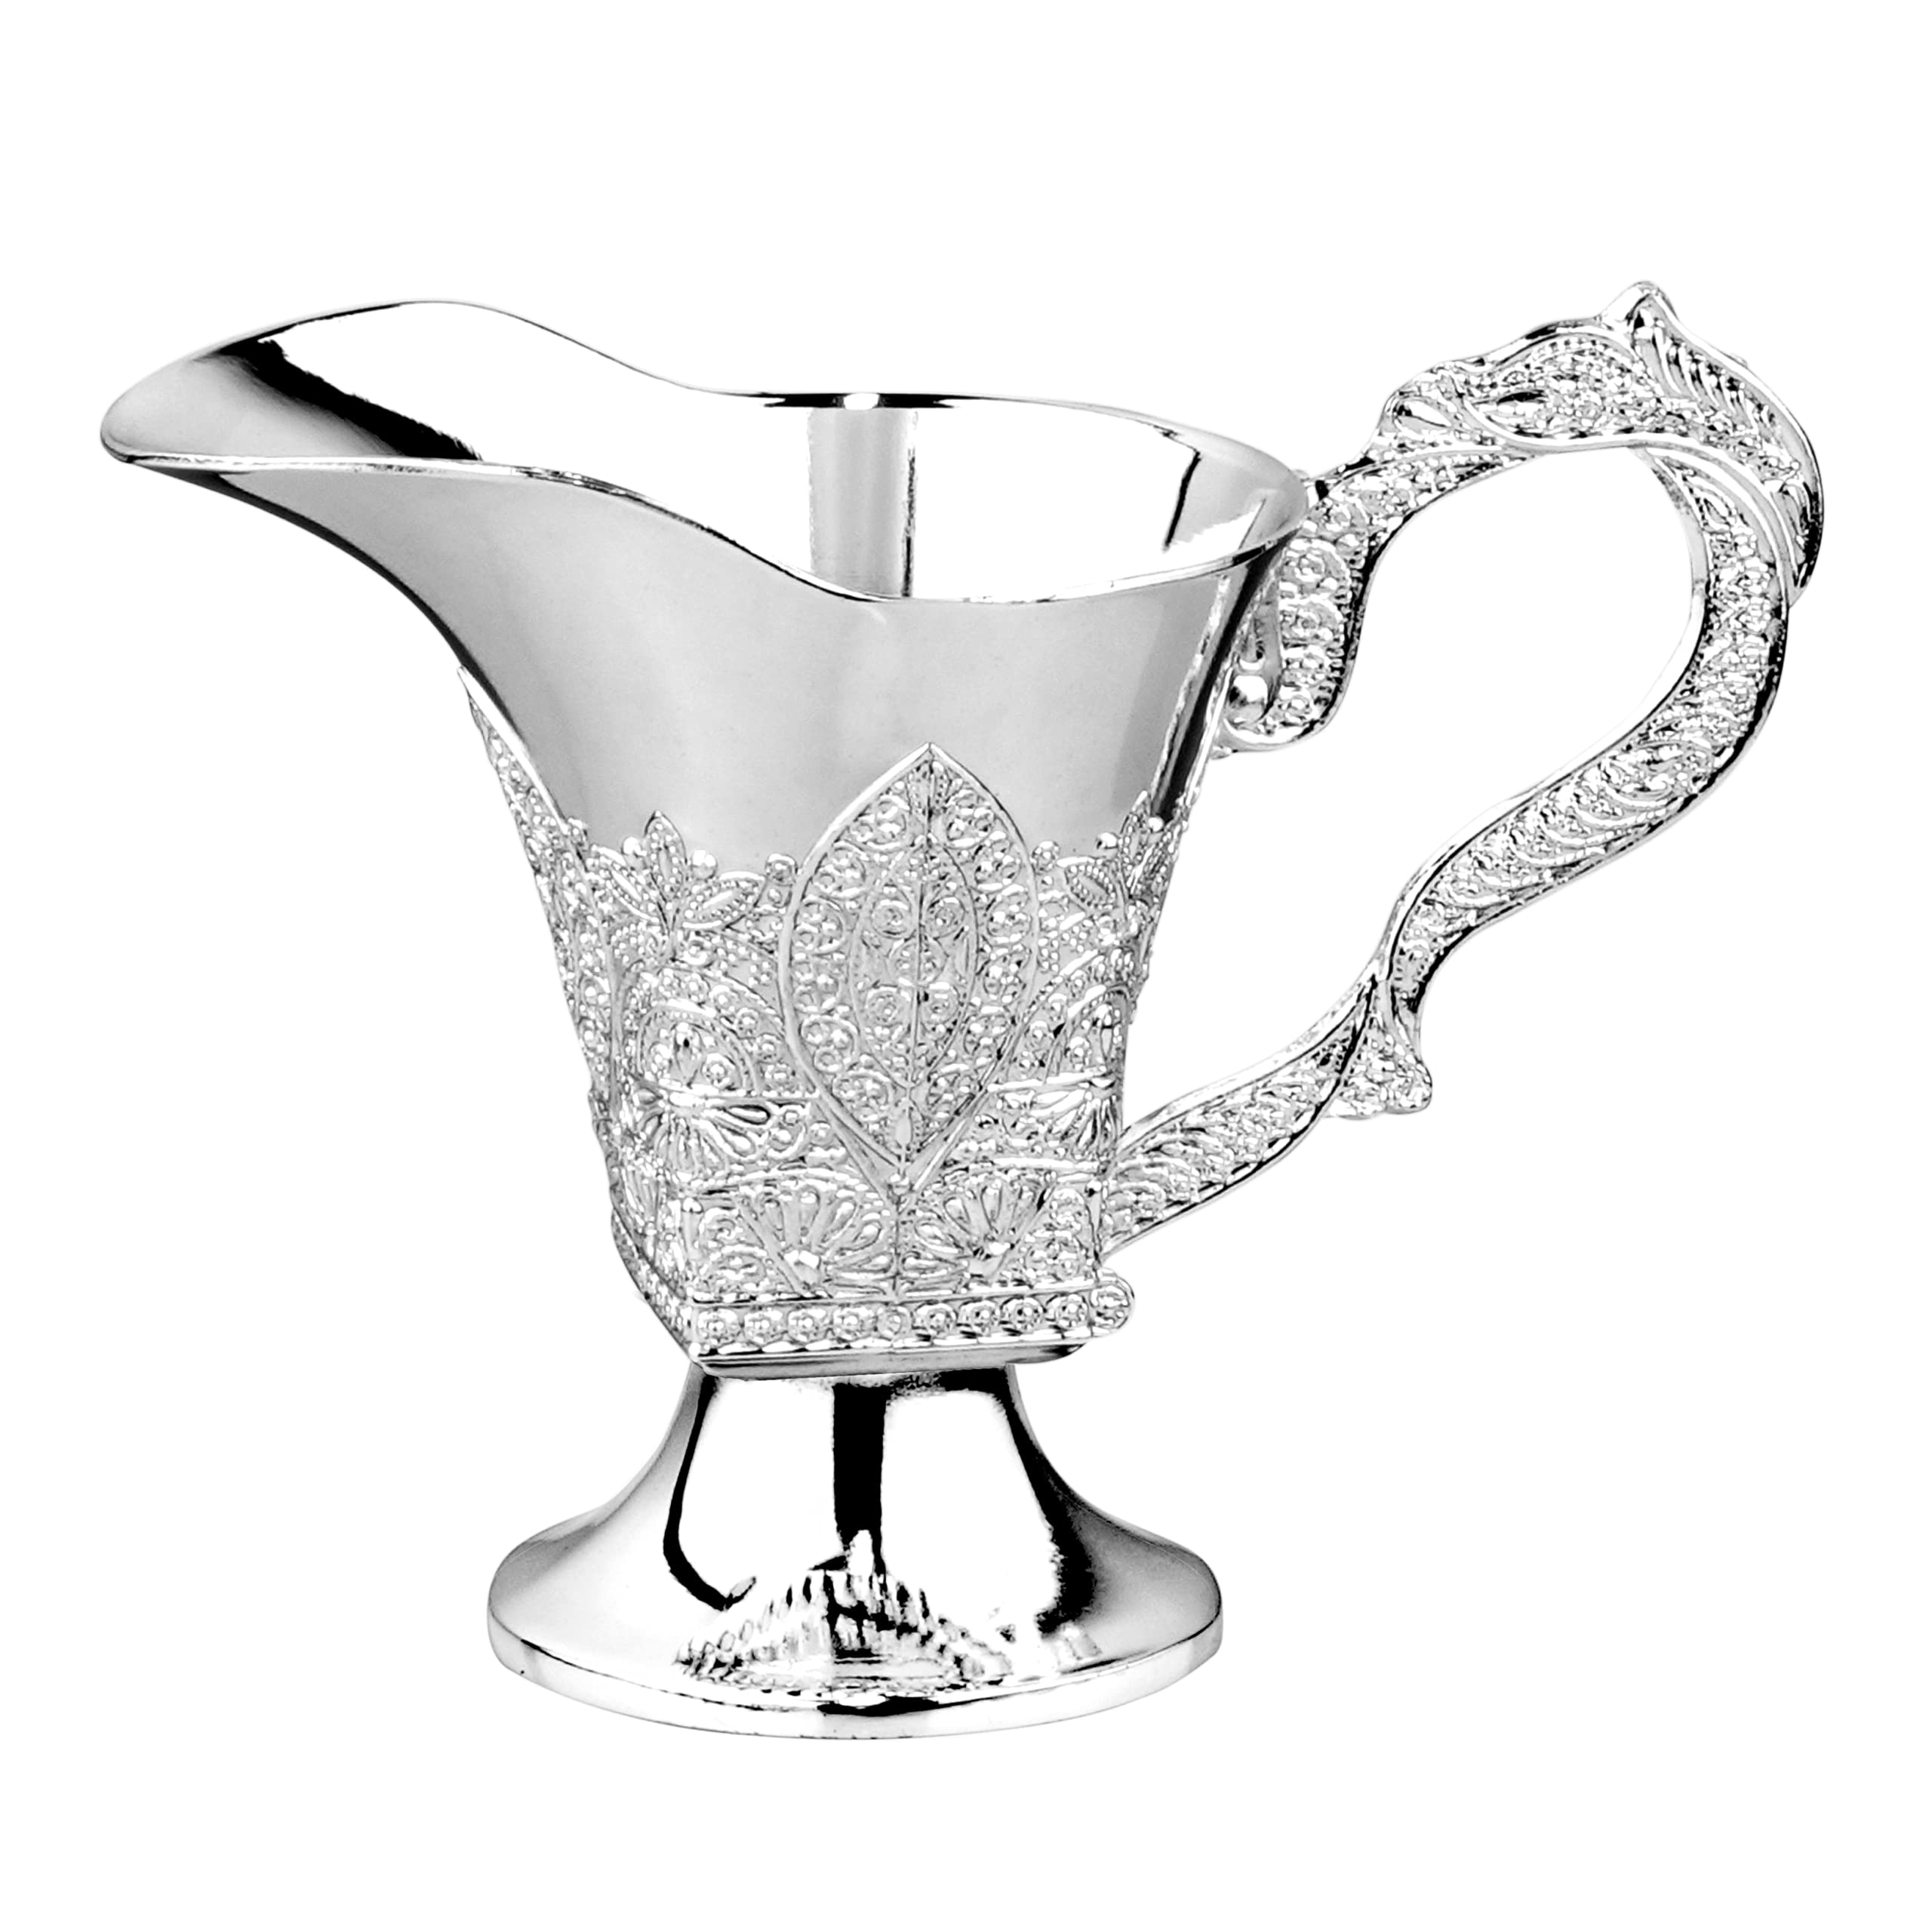 BOKER-TOV SHALOM Mayim Achronim Set - Silver Plated Judaica Washing Cup and Bowl Set (Filigree Design)